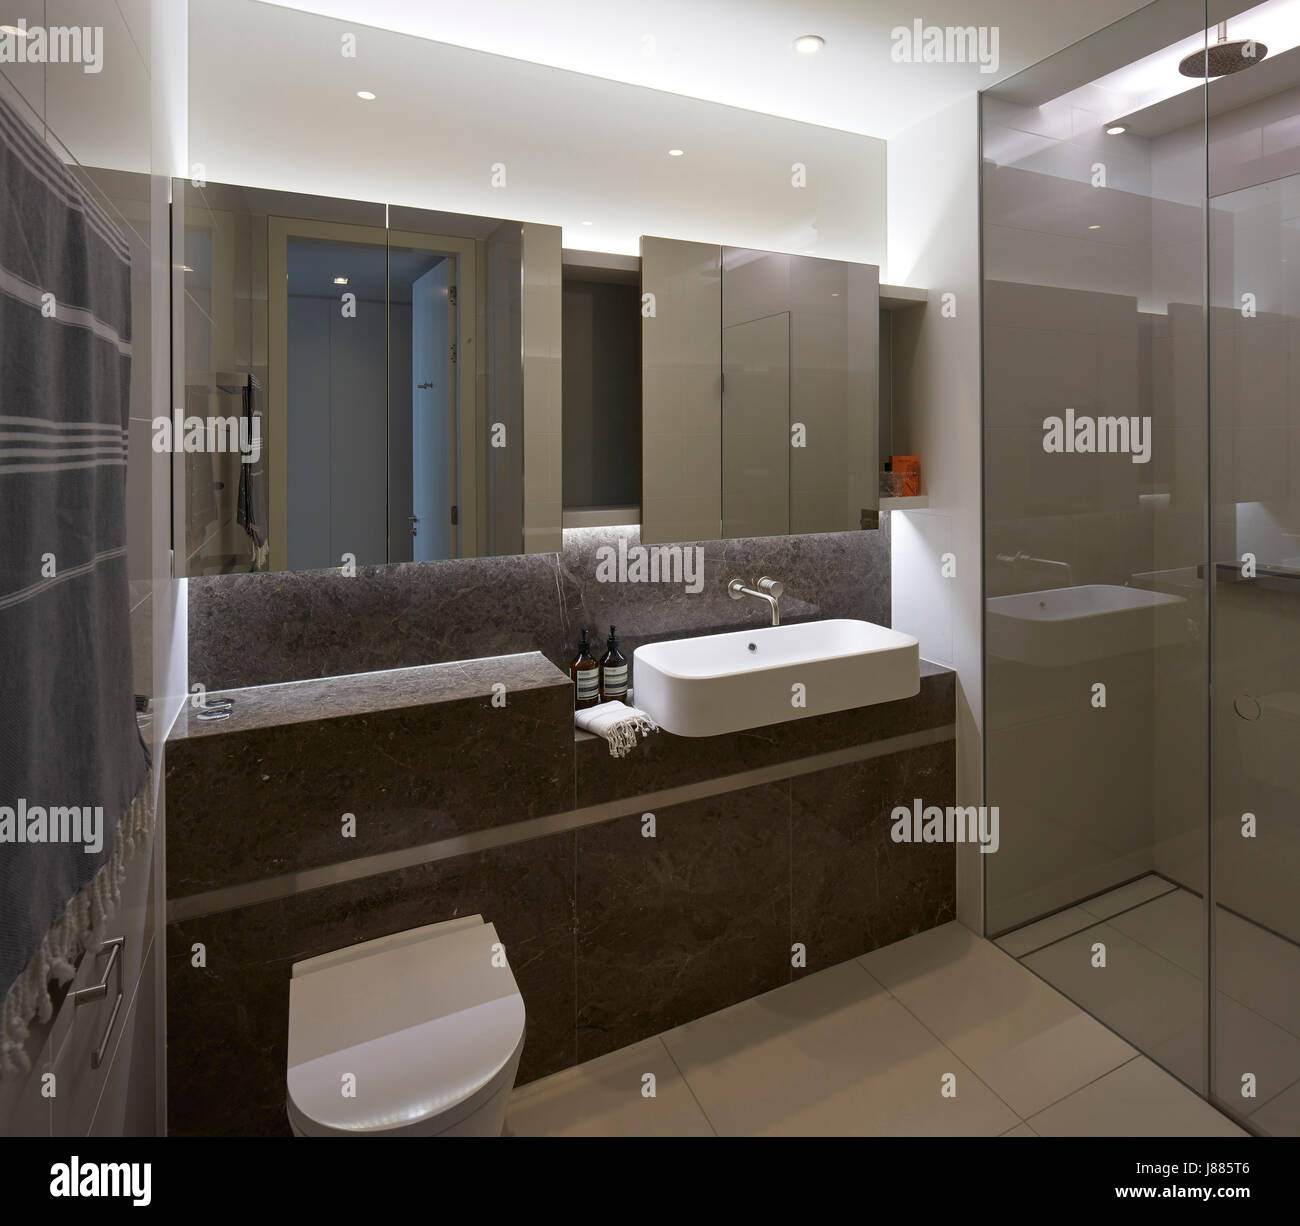 Bathroom. South Bank Tower, London, United Kingdom. Architect: Johnson Naylor , 2016. Stock Photo